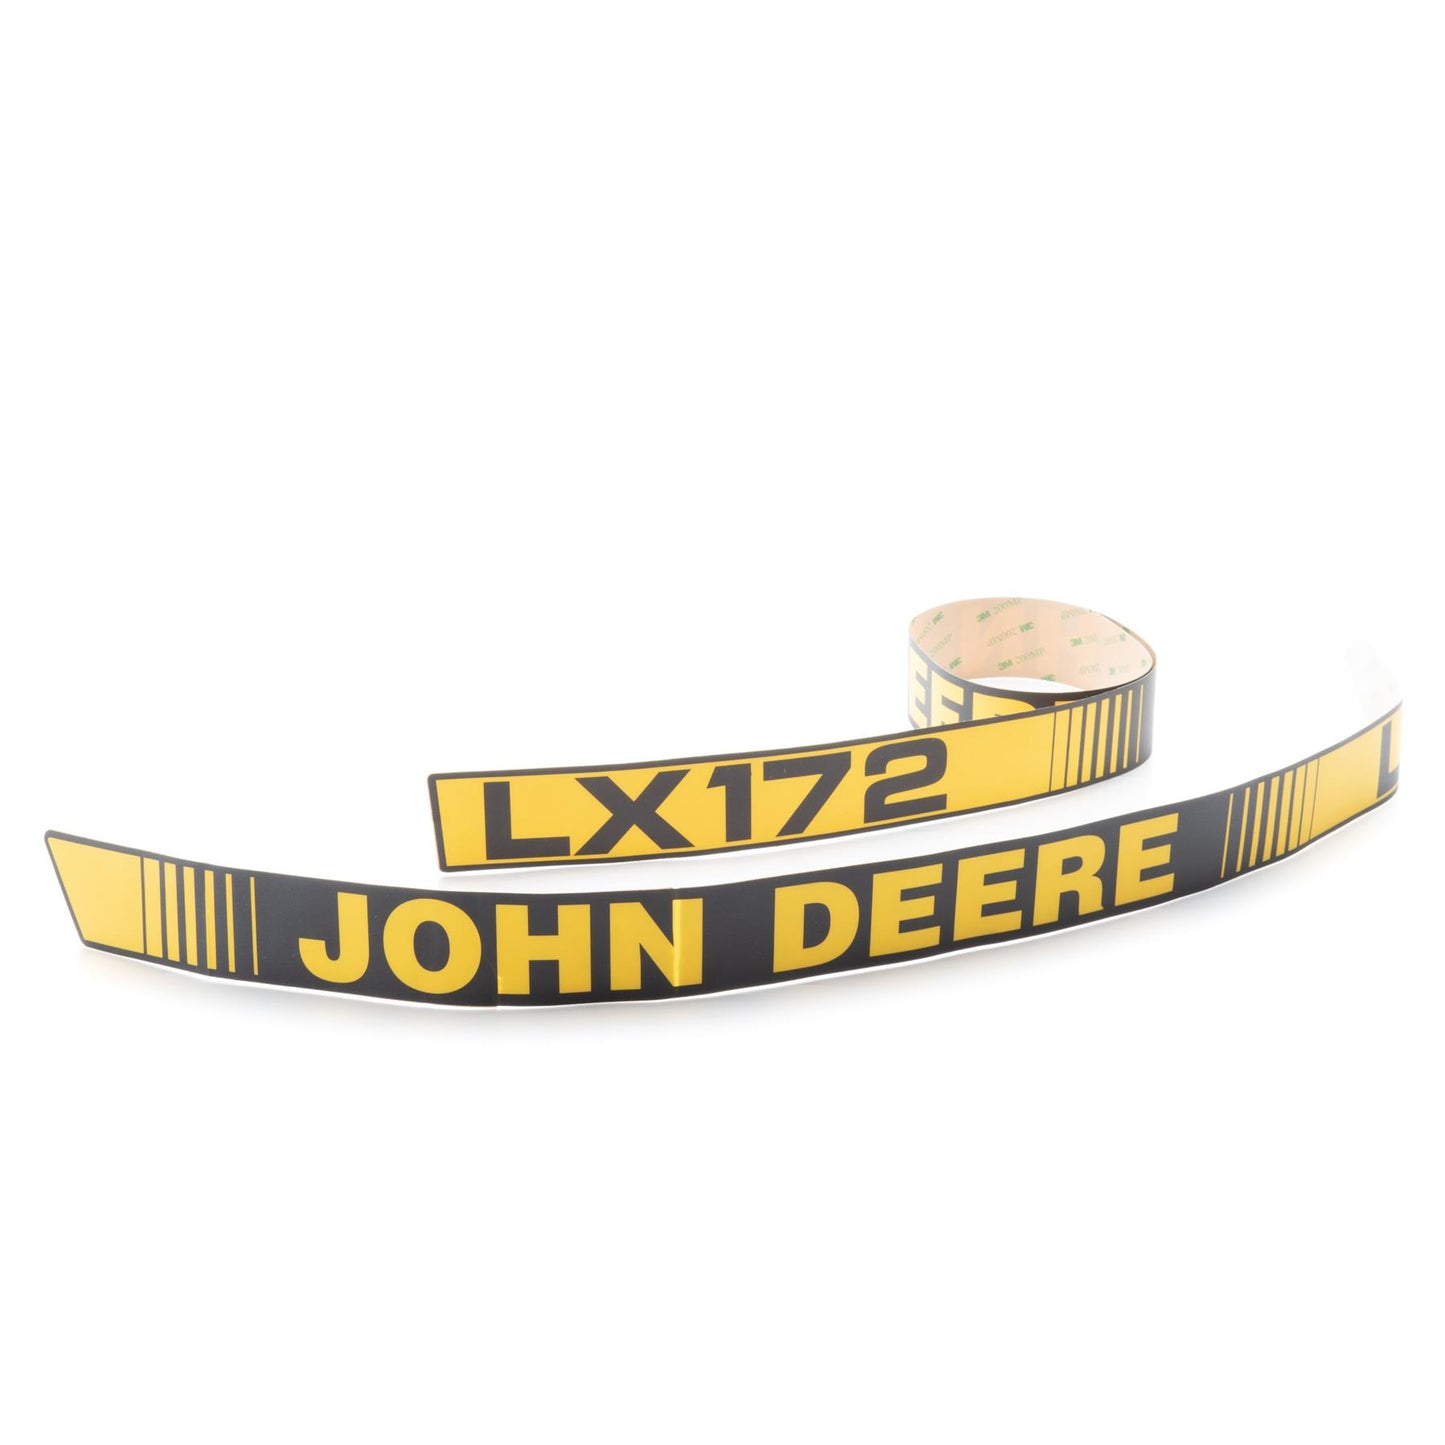 John Deere Decal - LX172 - Both Sides - M116034 M116035